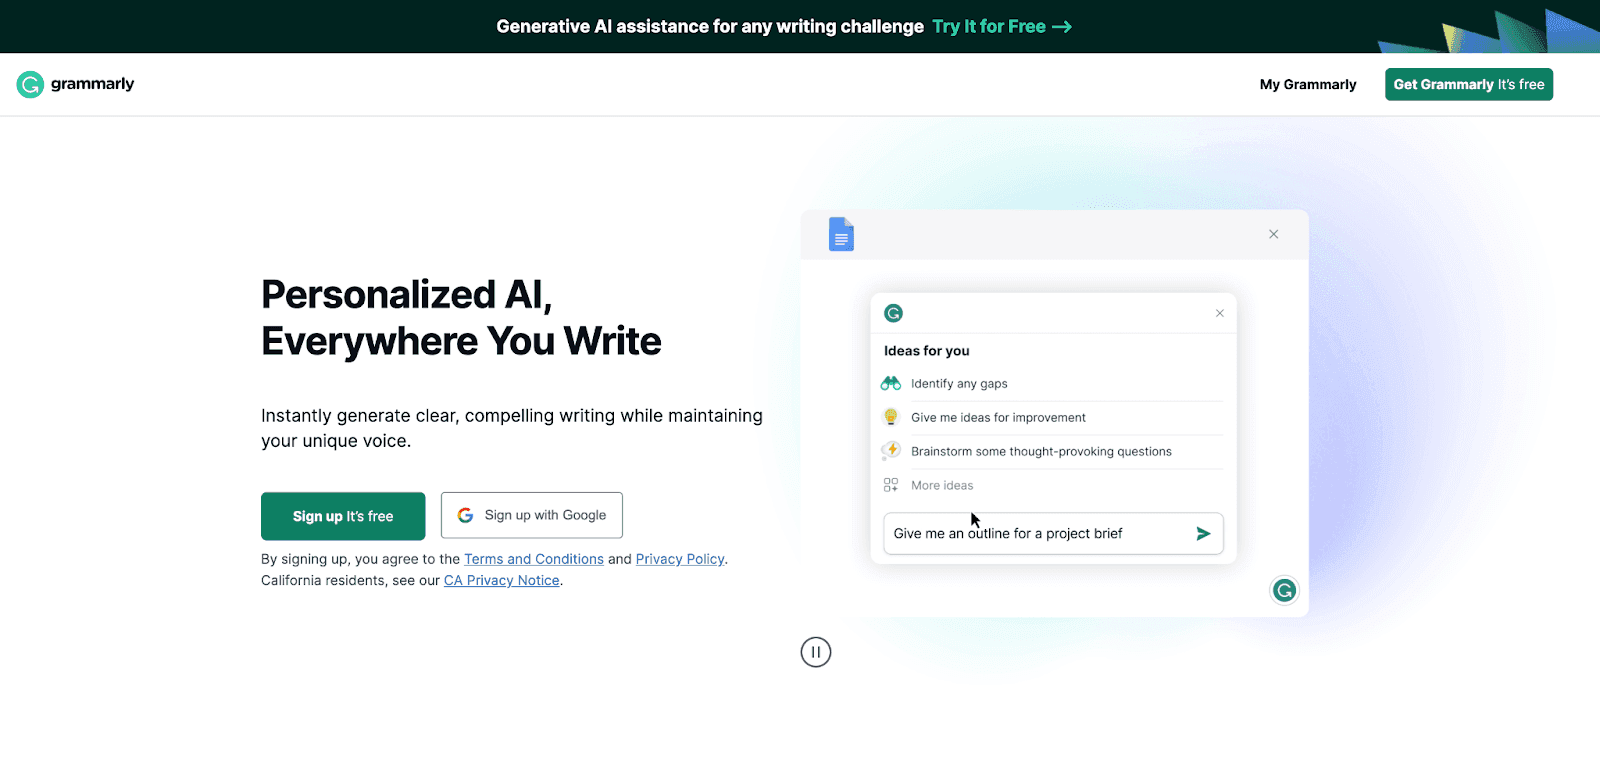 Personalized AI, Everywhere You Write